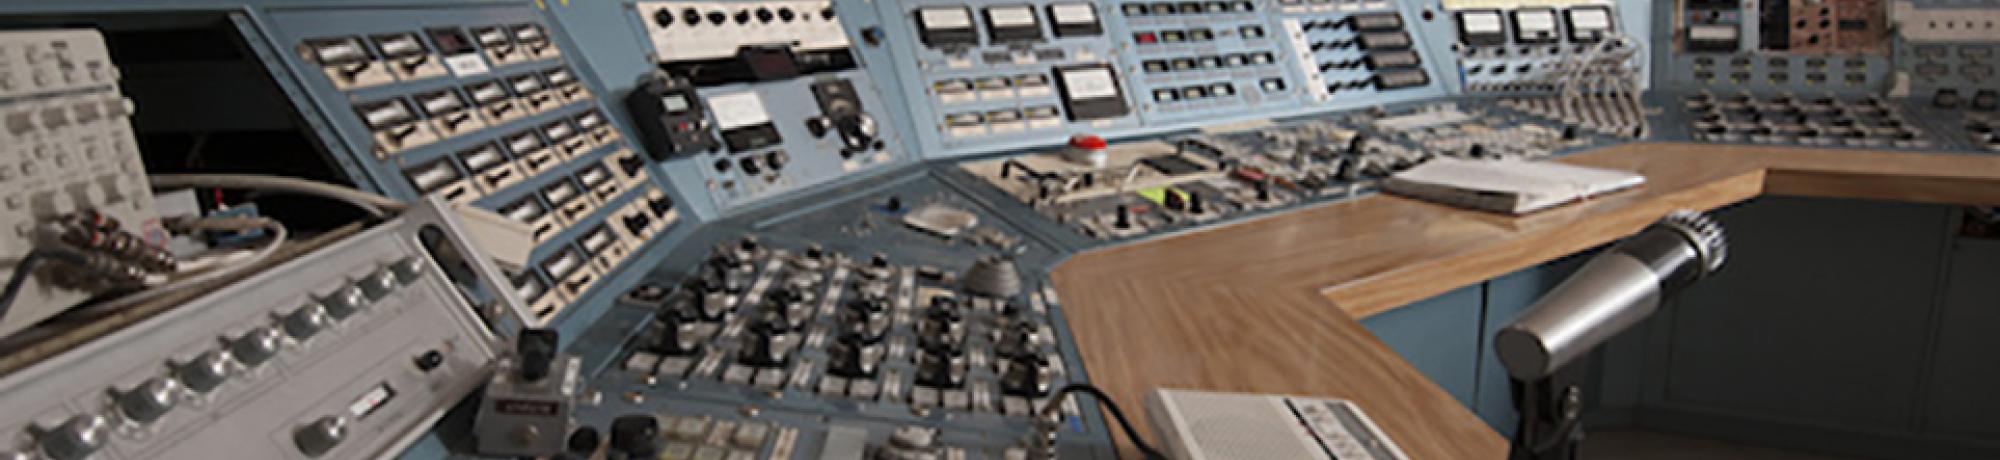 Crocker Nuclear Laboratory control room